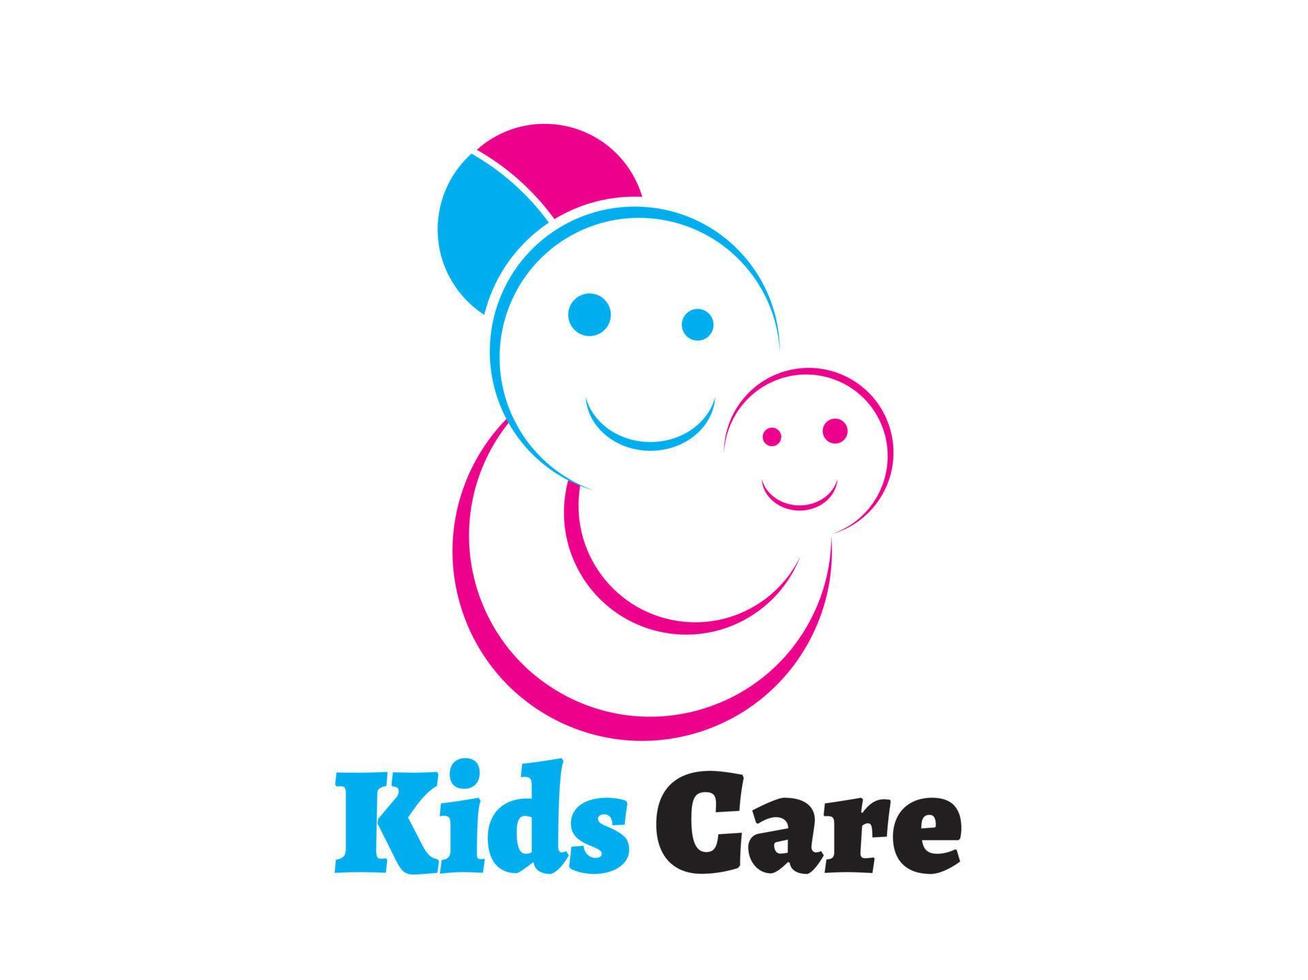 Kinderpflege-Logo vektor